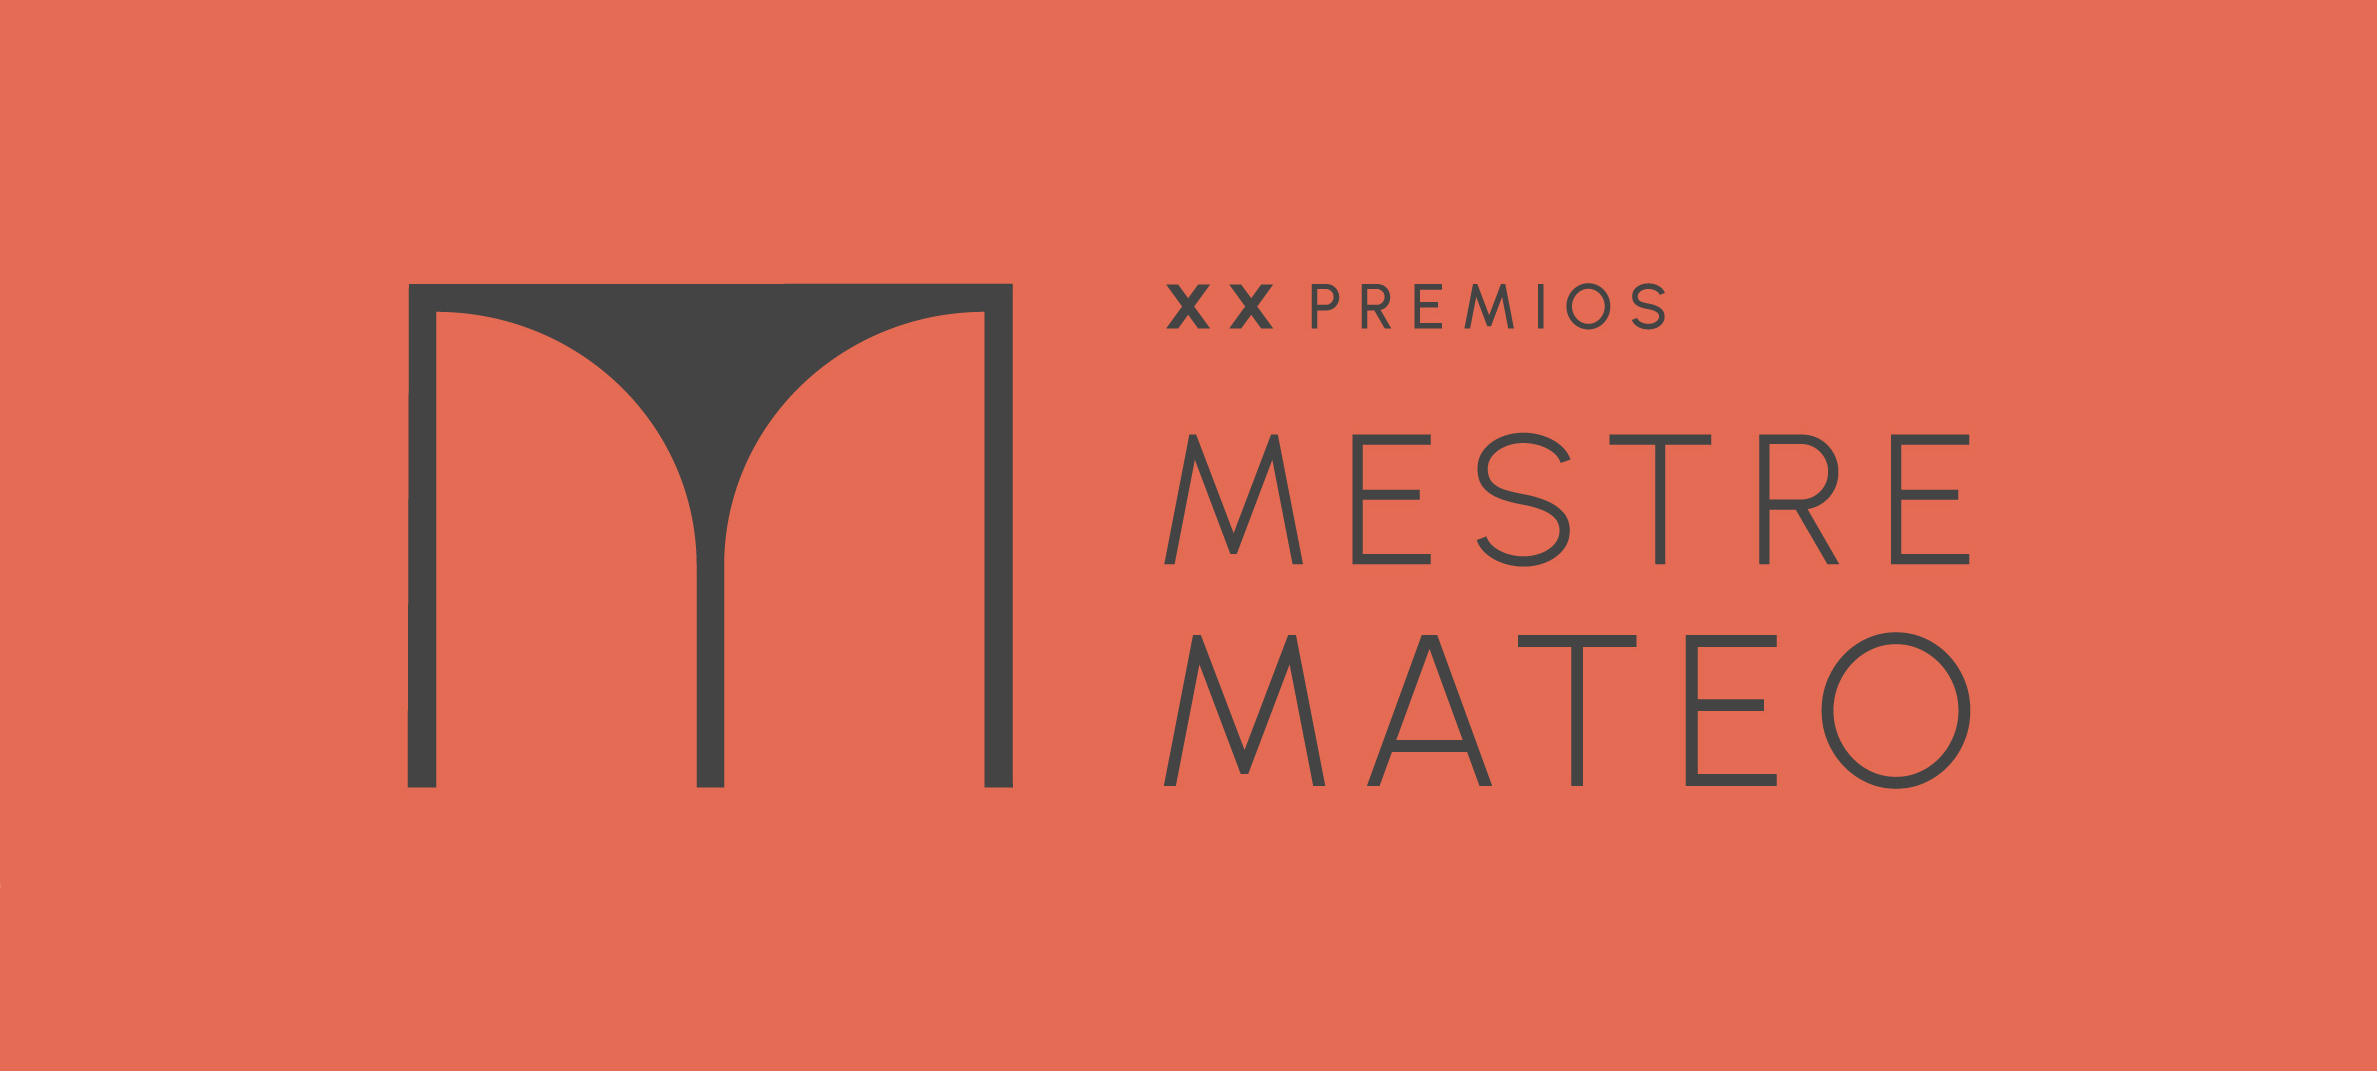 Presentamos nova imaxe e nova web dos Premios Mestre Mateo